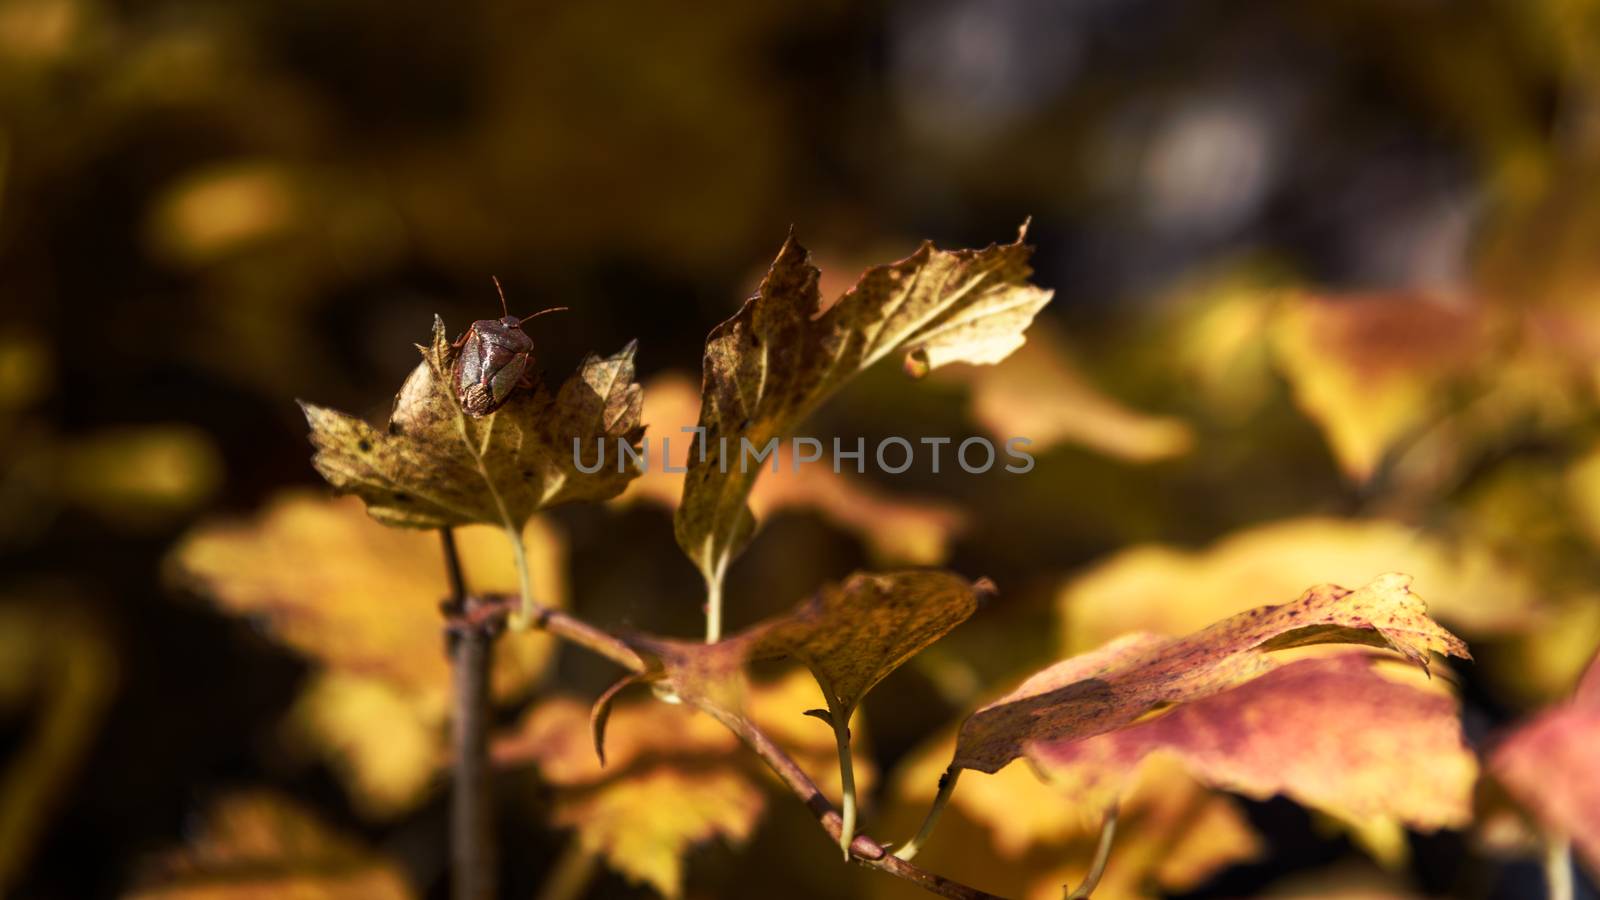 Bedbug Bug Of The Stink (Heteroptera) on leaf closeup autumn background by WolfWilhelm